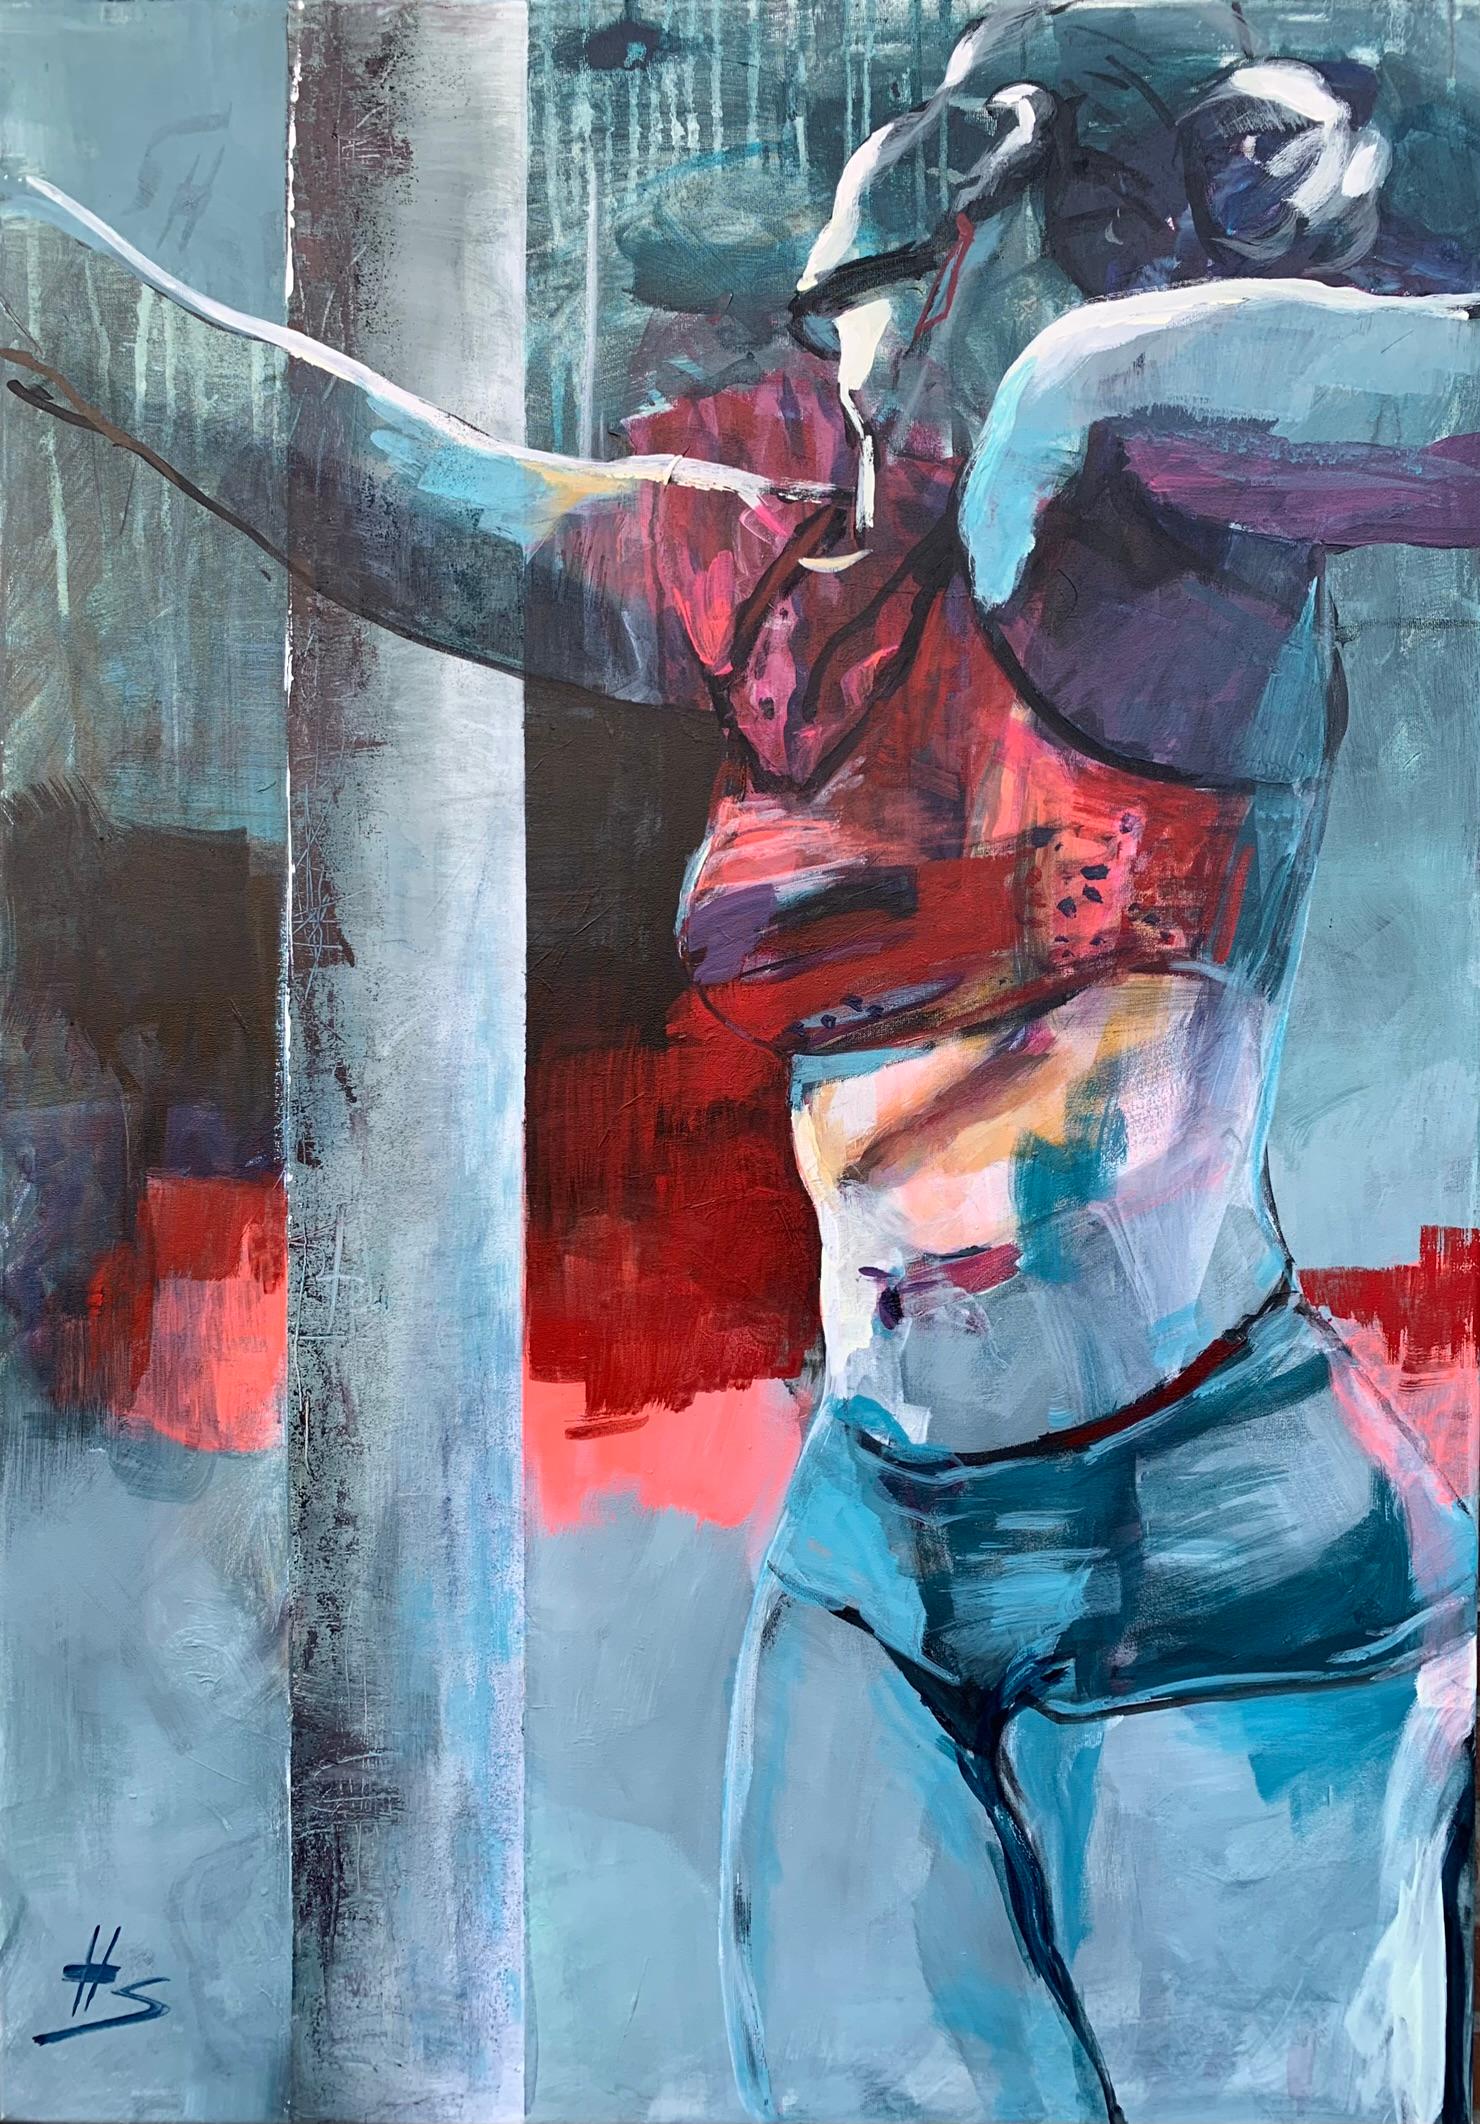 The artwork by Heike Schümann depicts a dancing woman